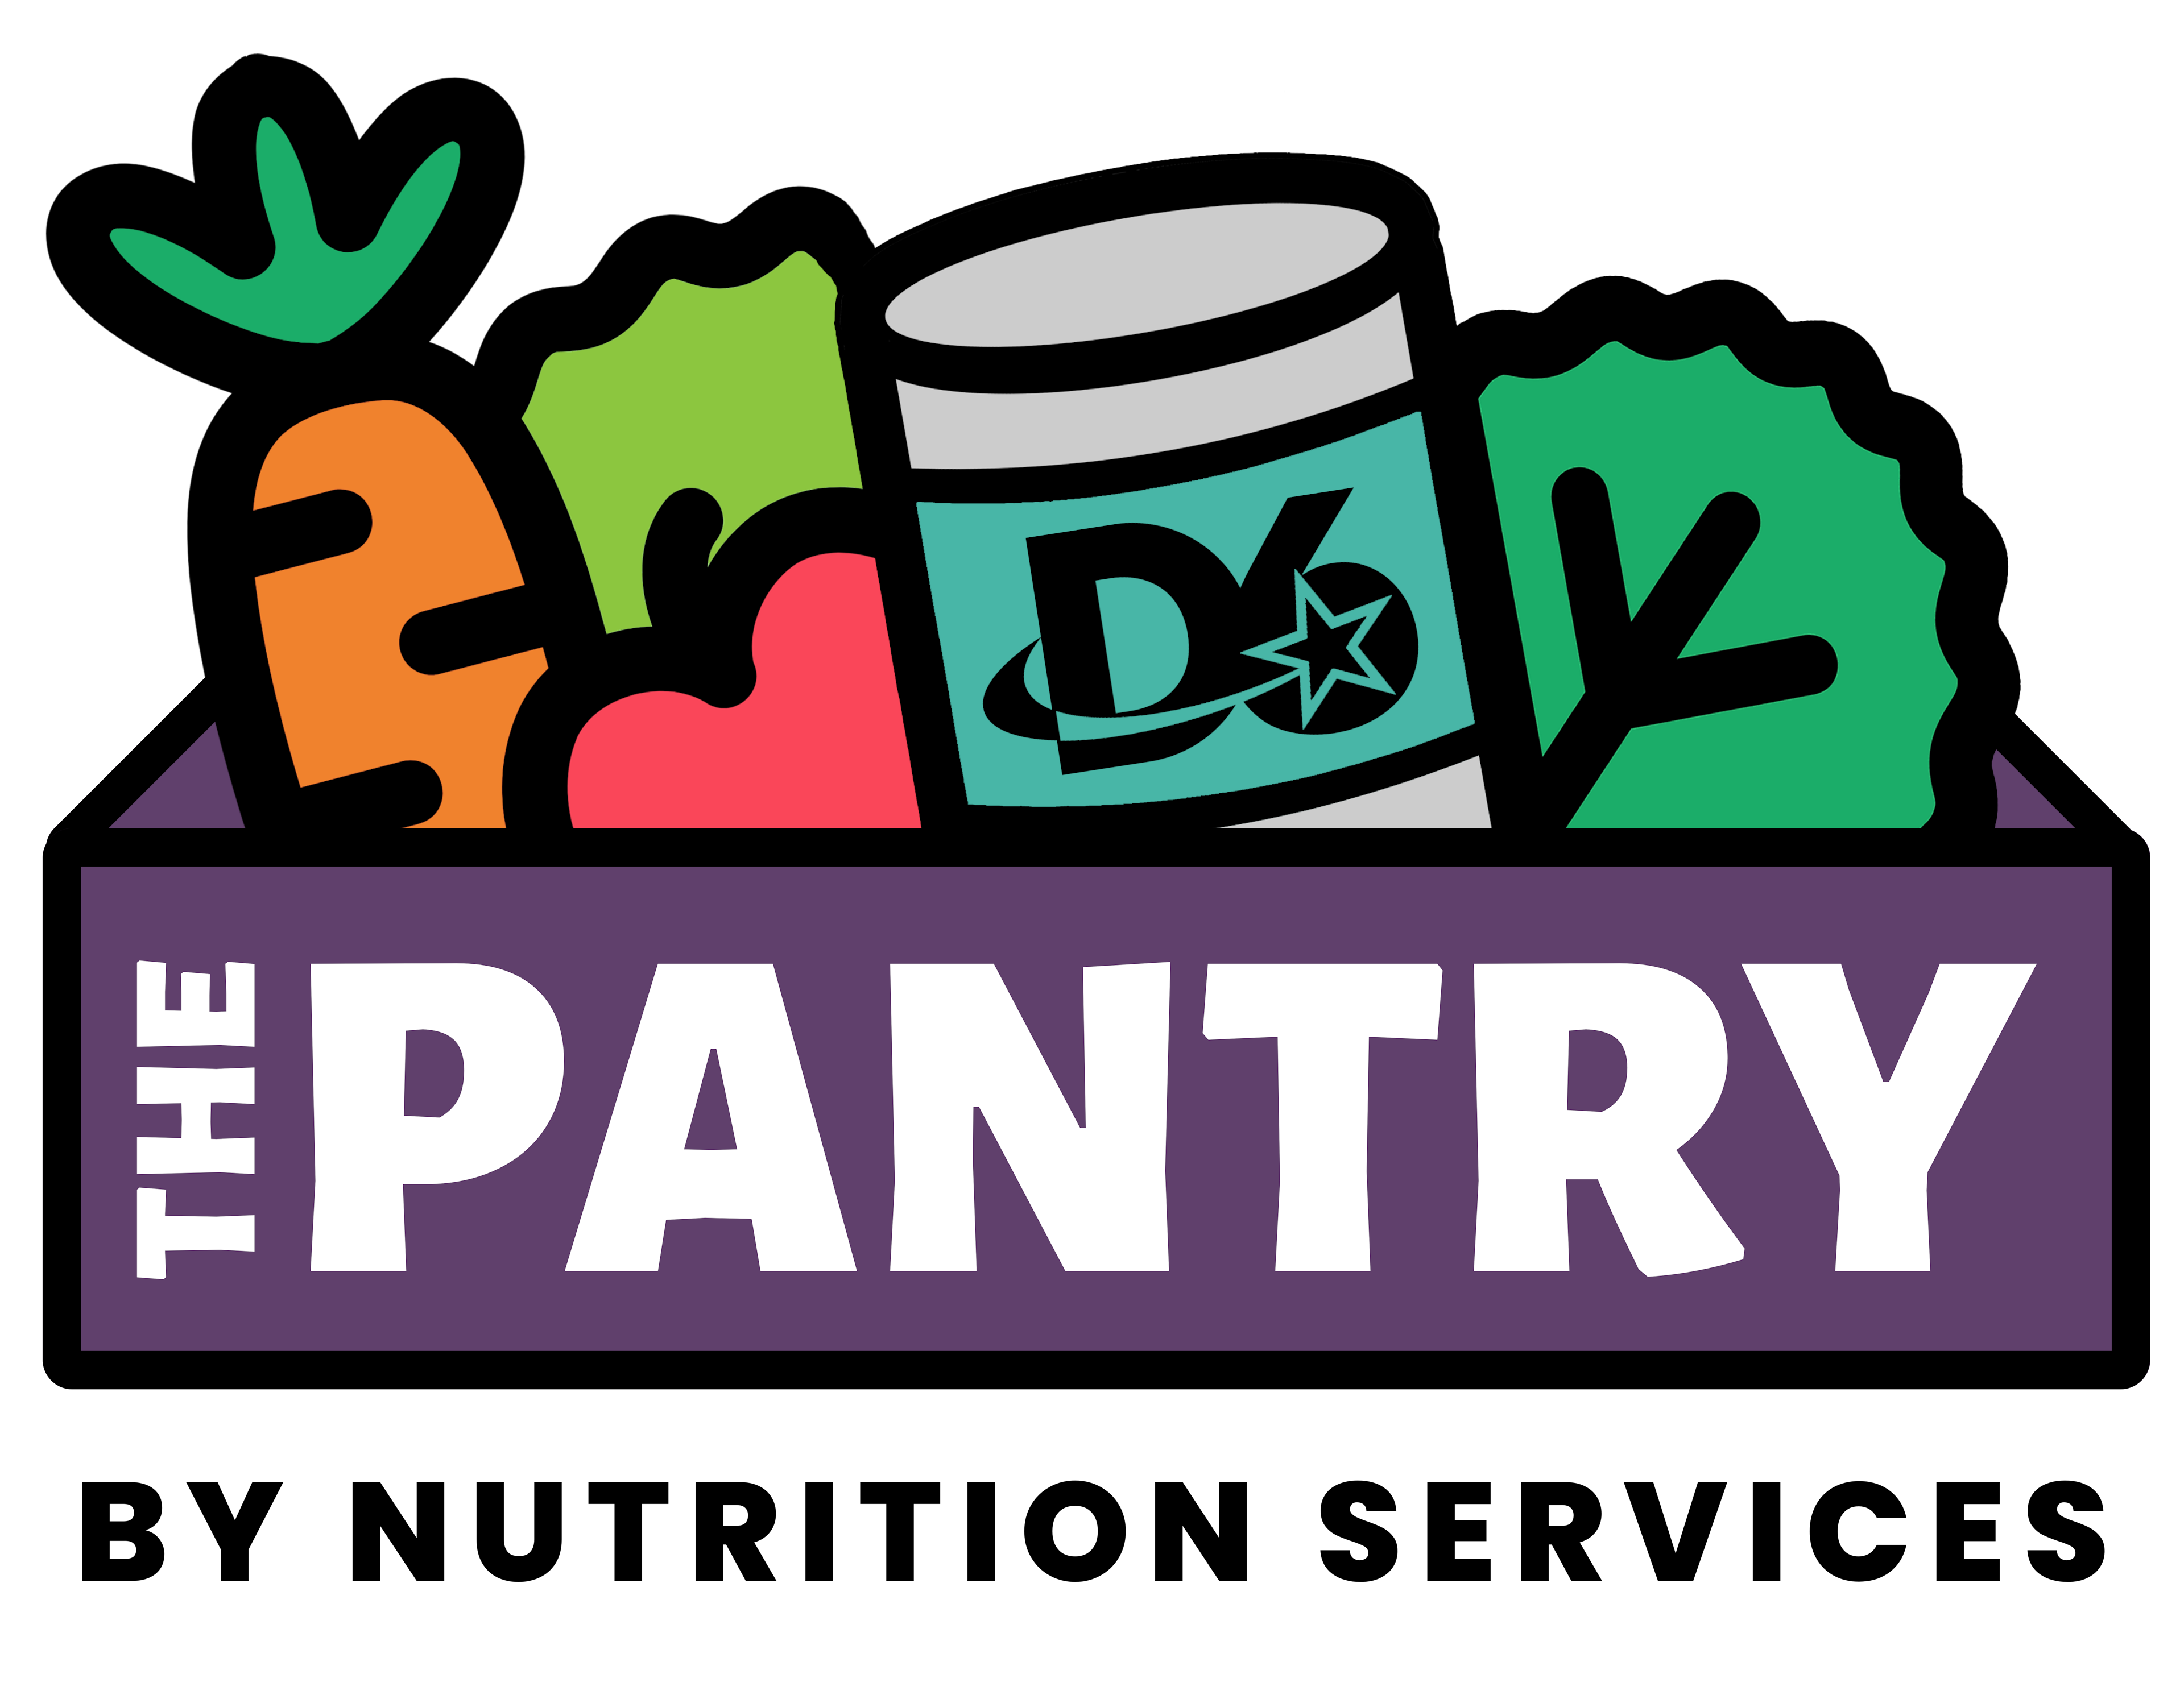 The Pantry Logo 